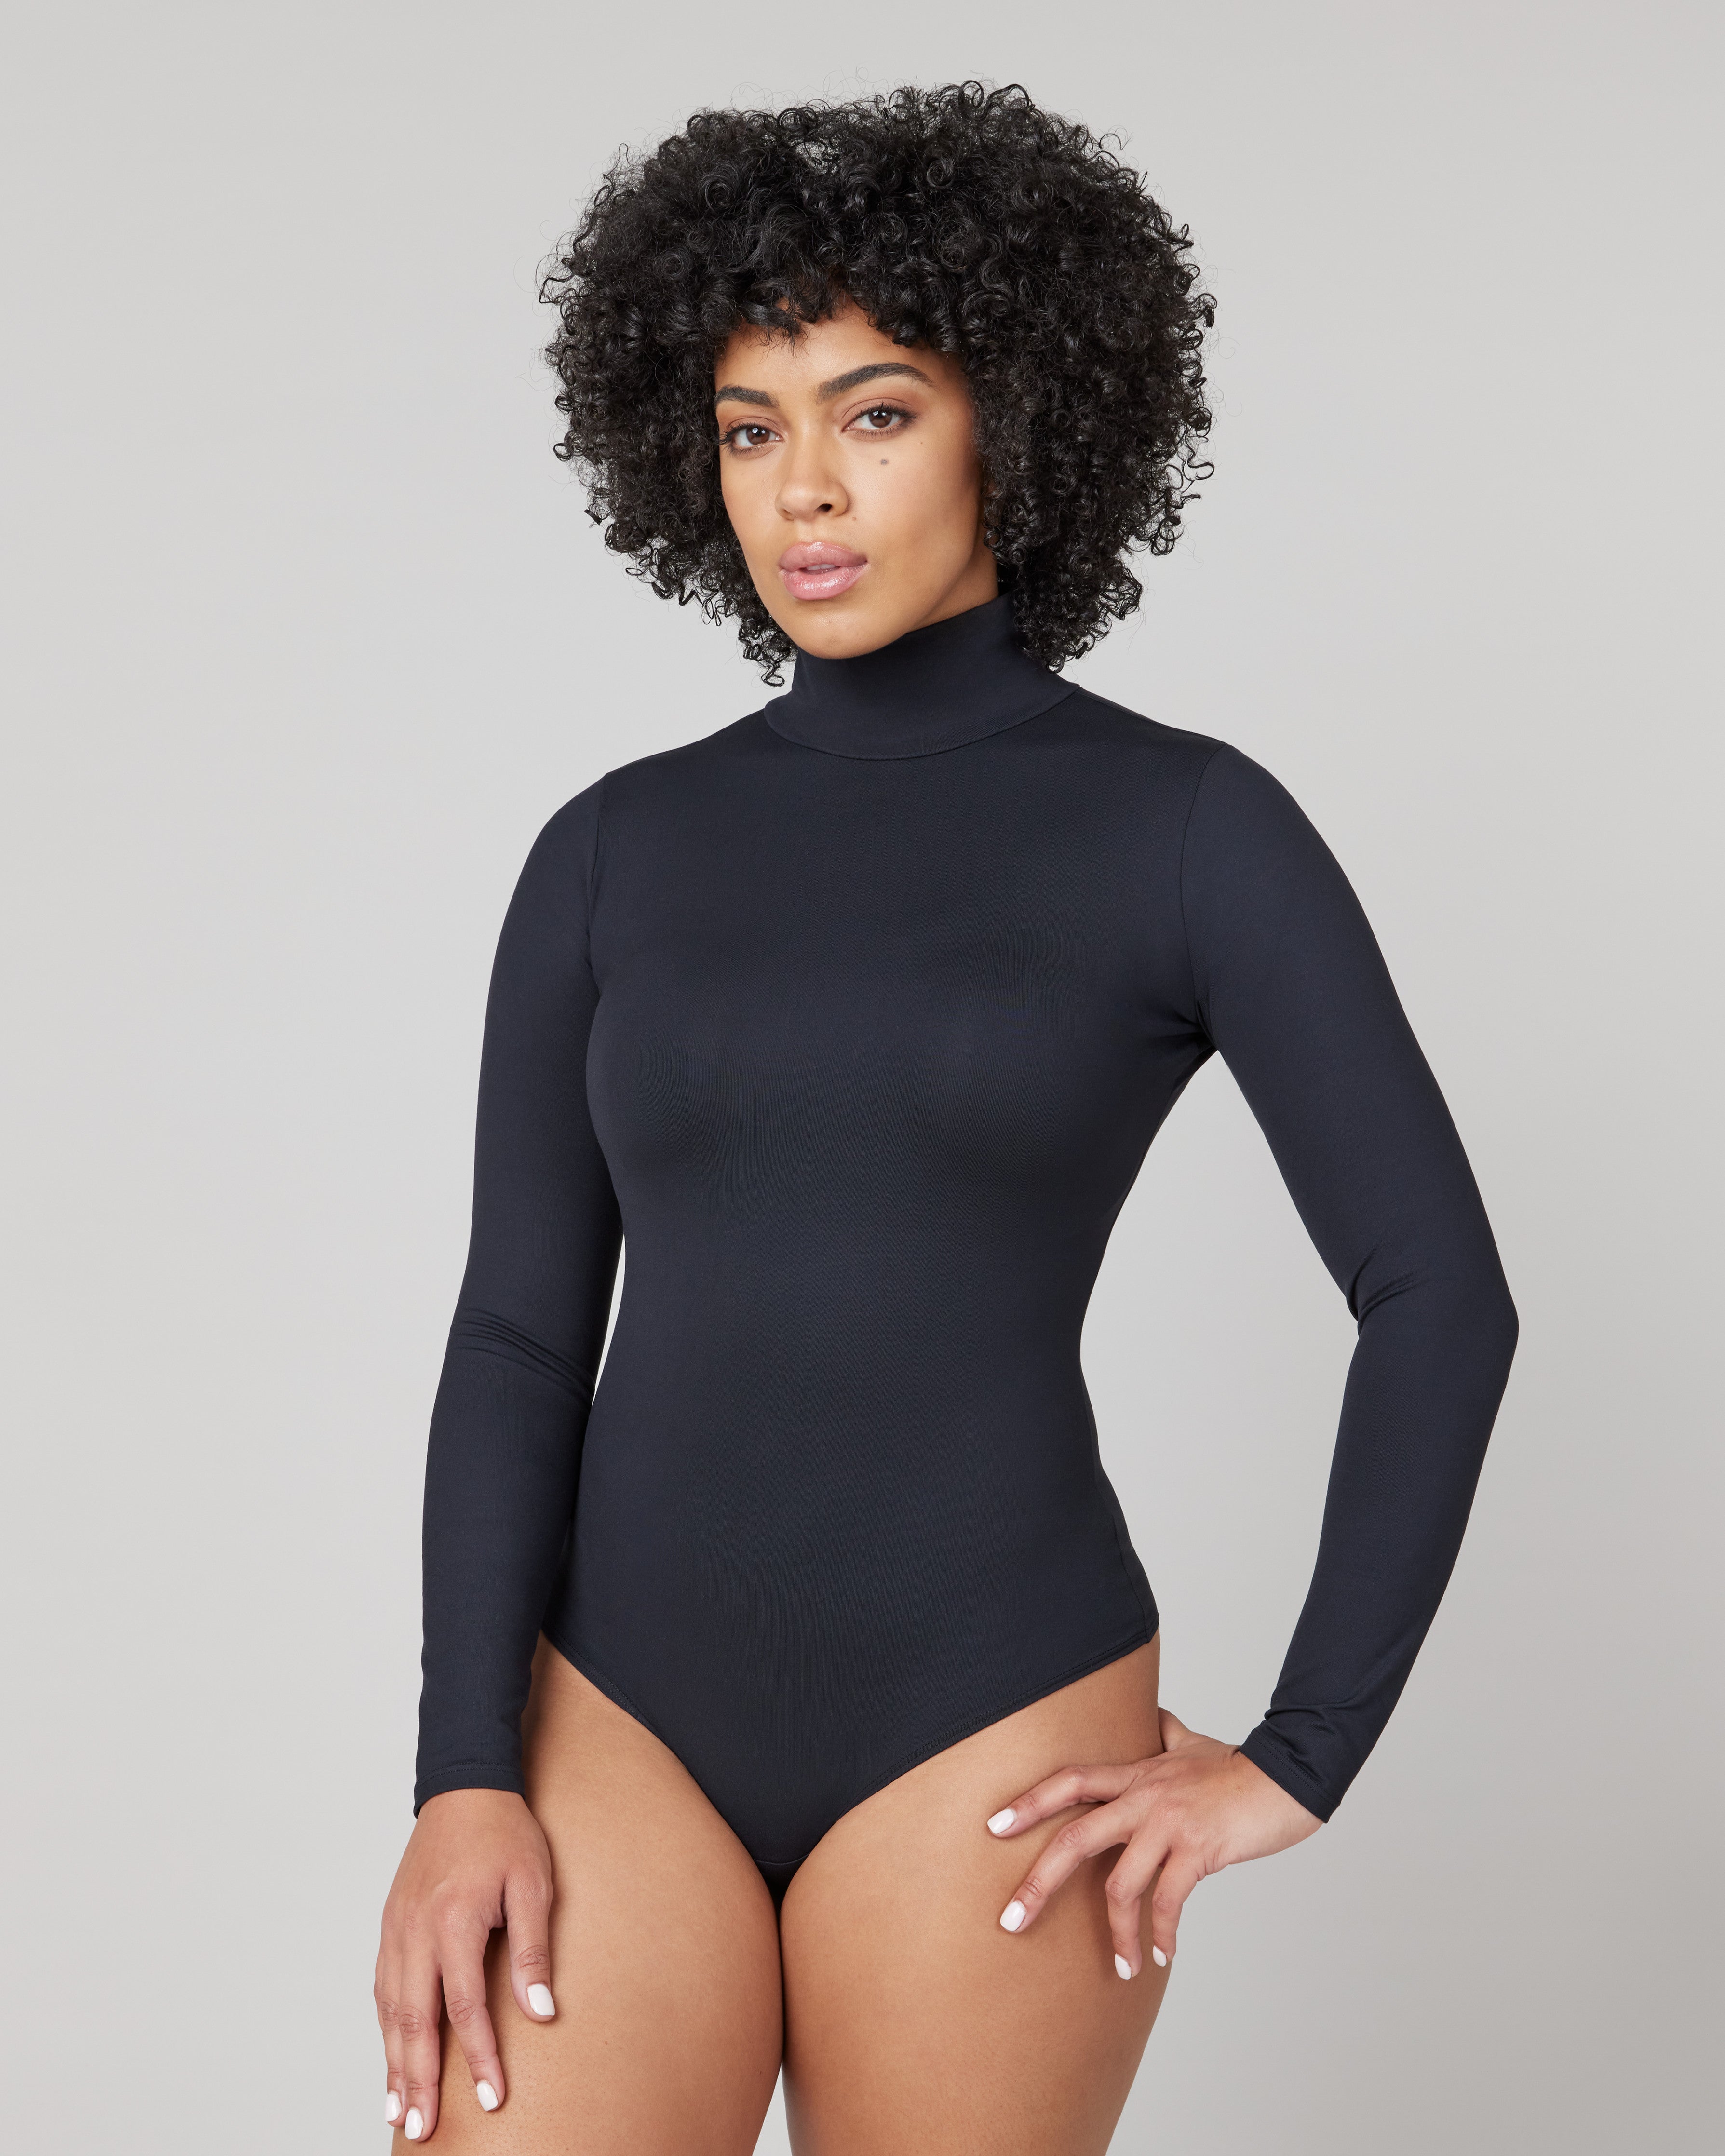 Bodysuit for Women Tummy Control Scoop Neck Long Sleeve Bodysuit